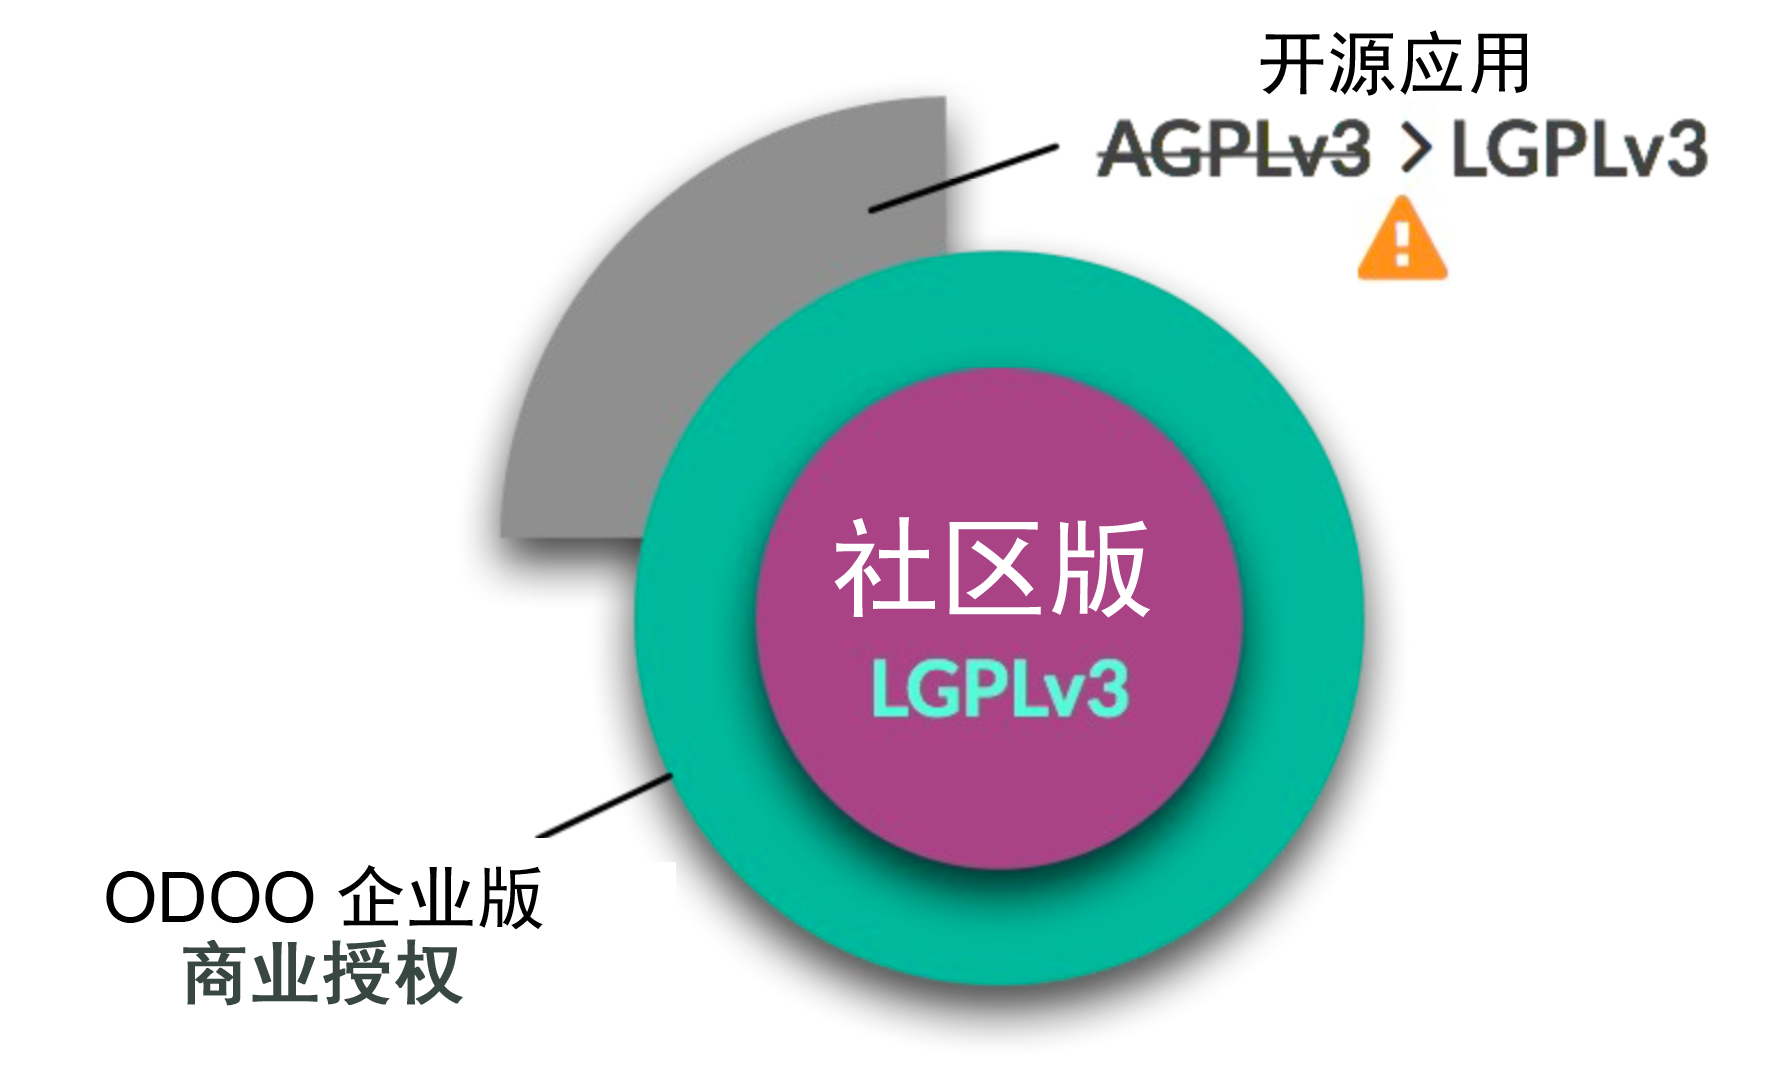 AGPL协议与商业授权协议不兼容